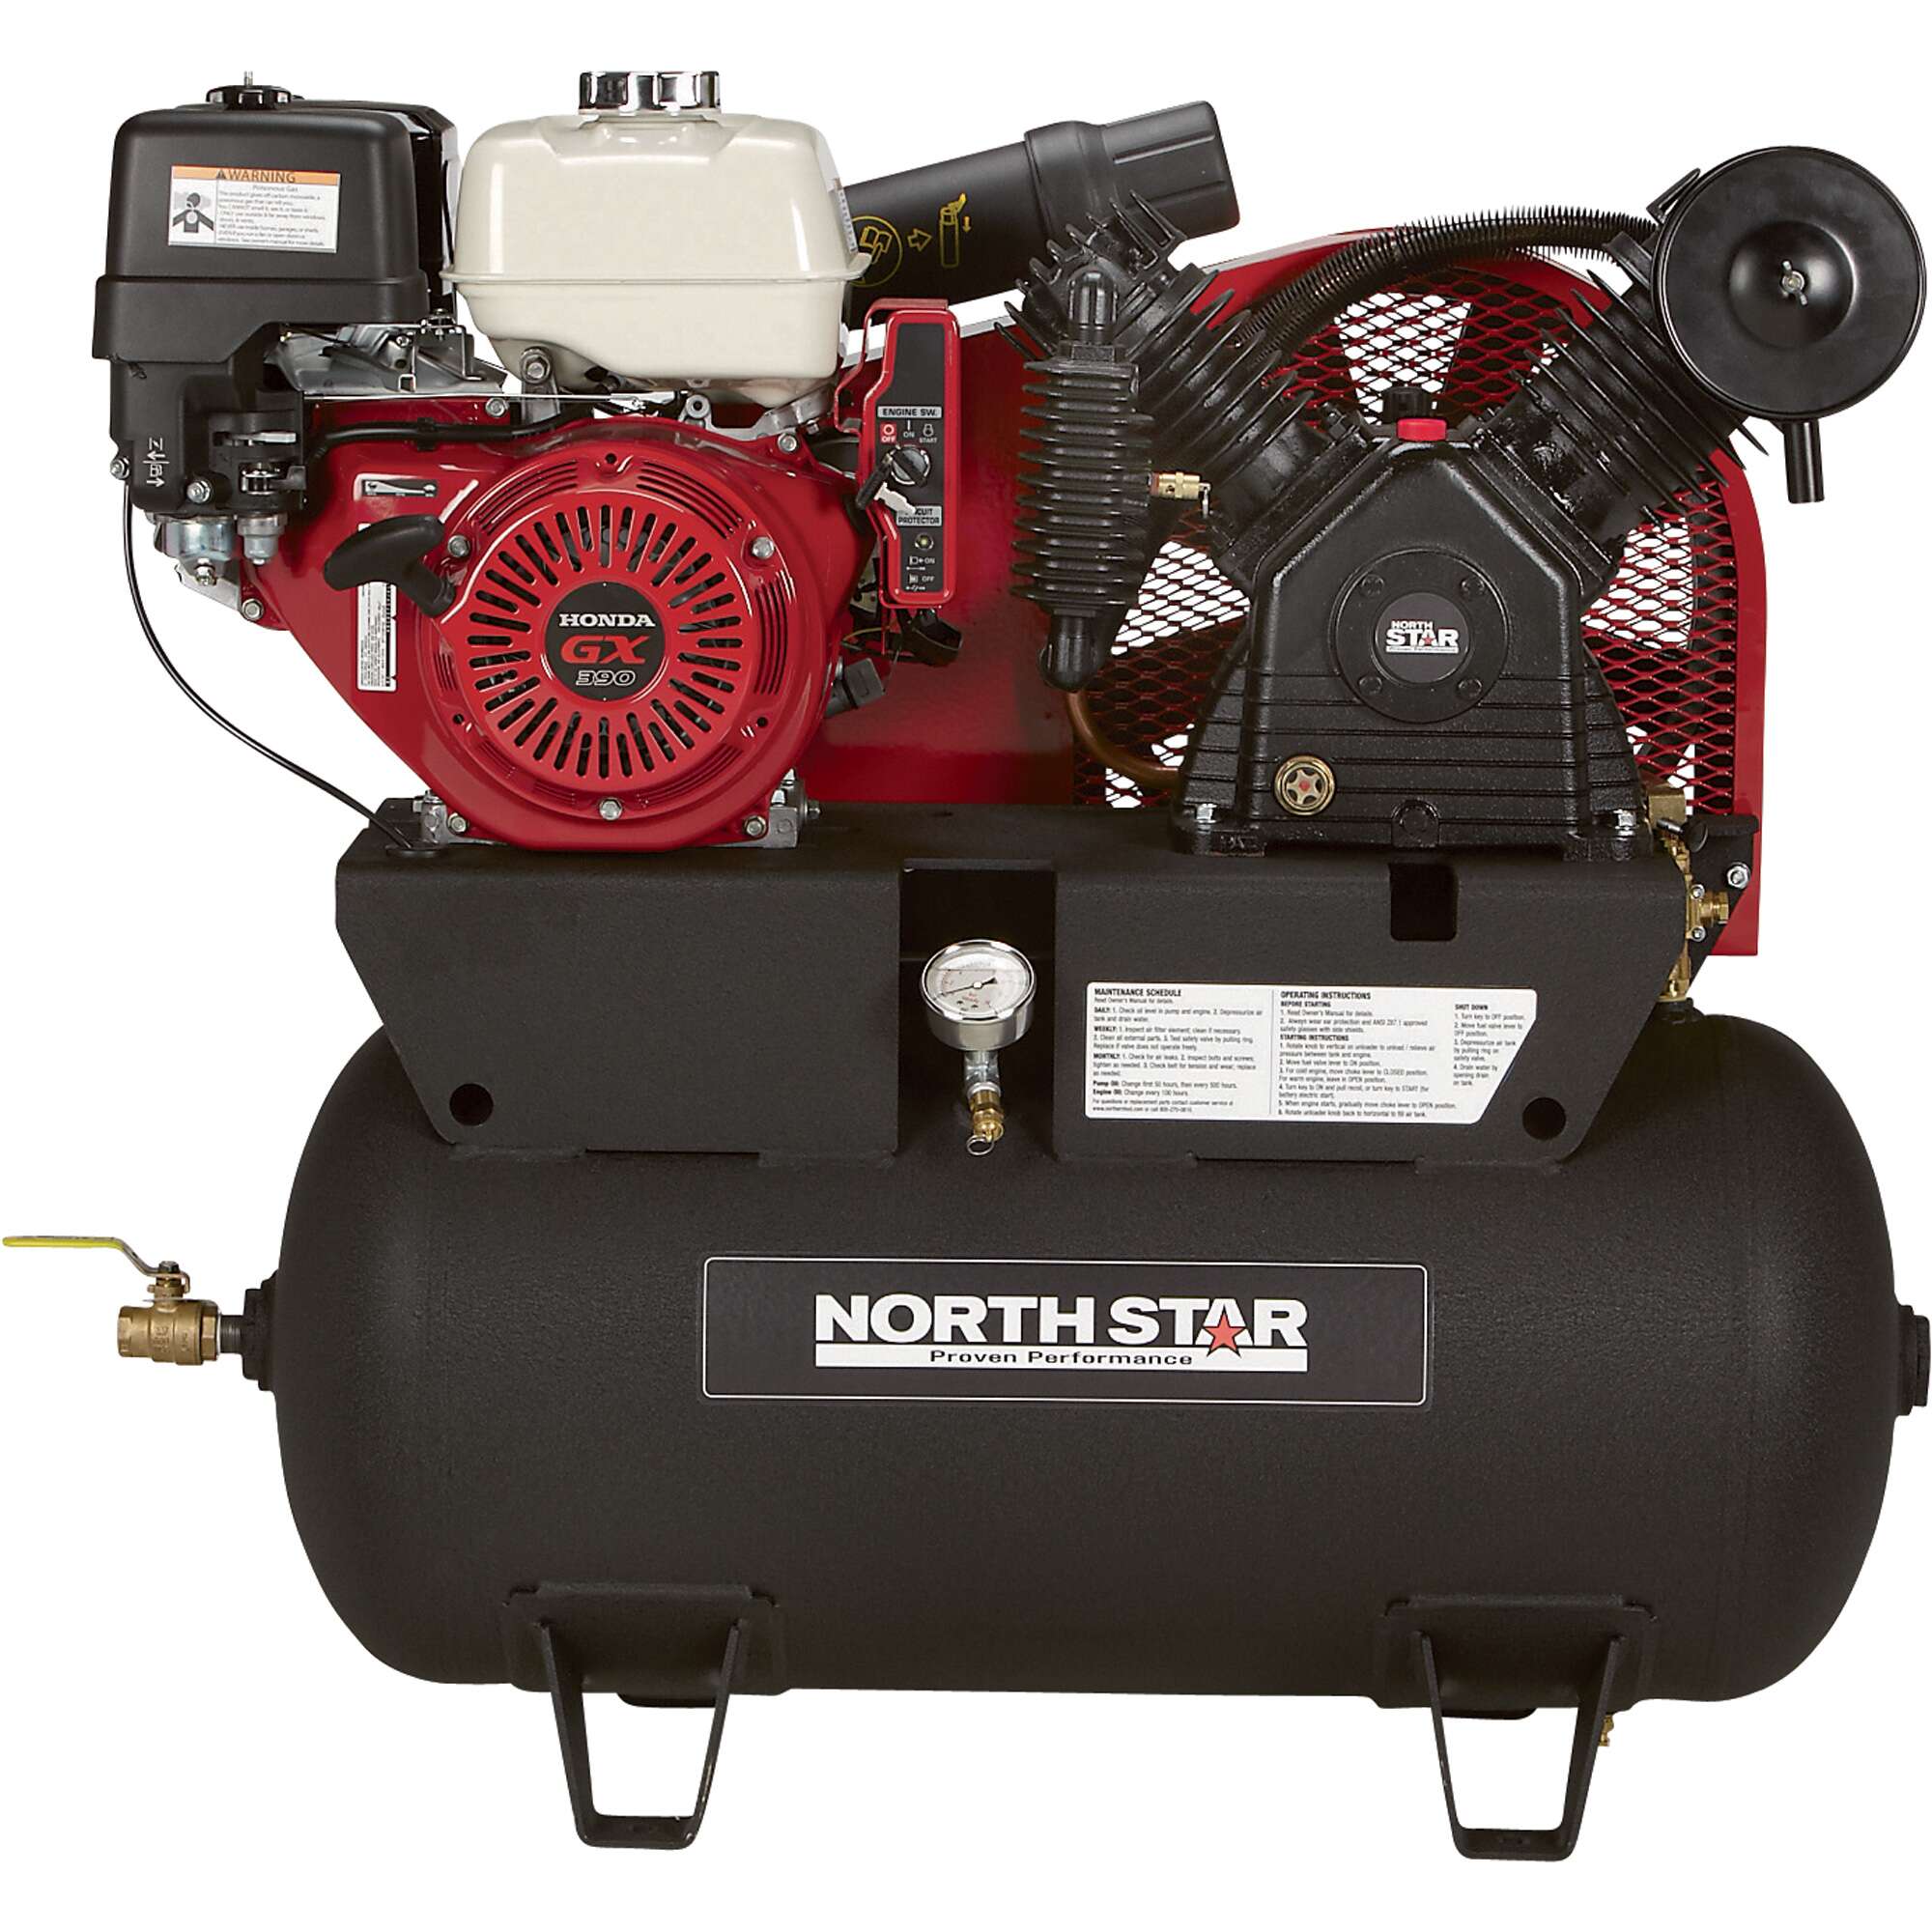 NorthStar Portable Gas Powered Air Compressor Honda GX390 OHV Engine 30Gallon Horizontal Tank 24.4 CFM 90 PSI